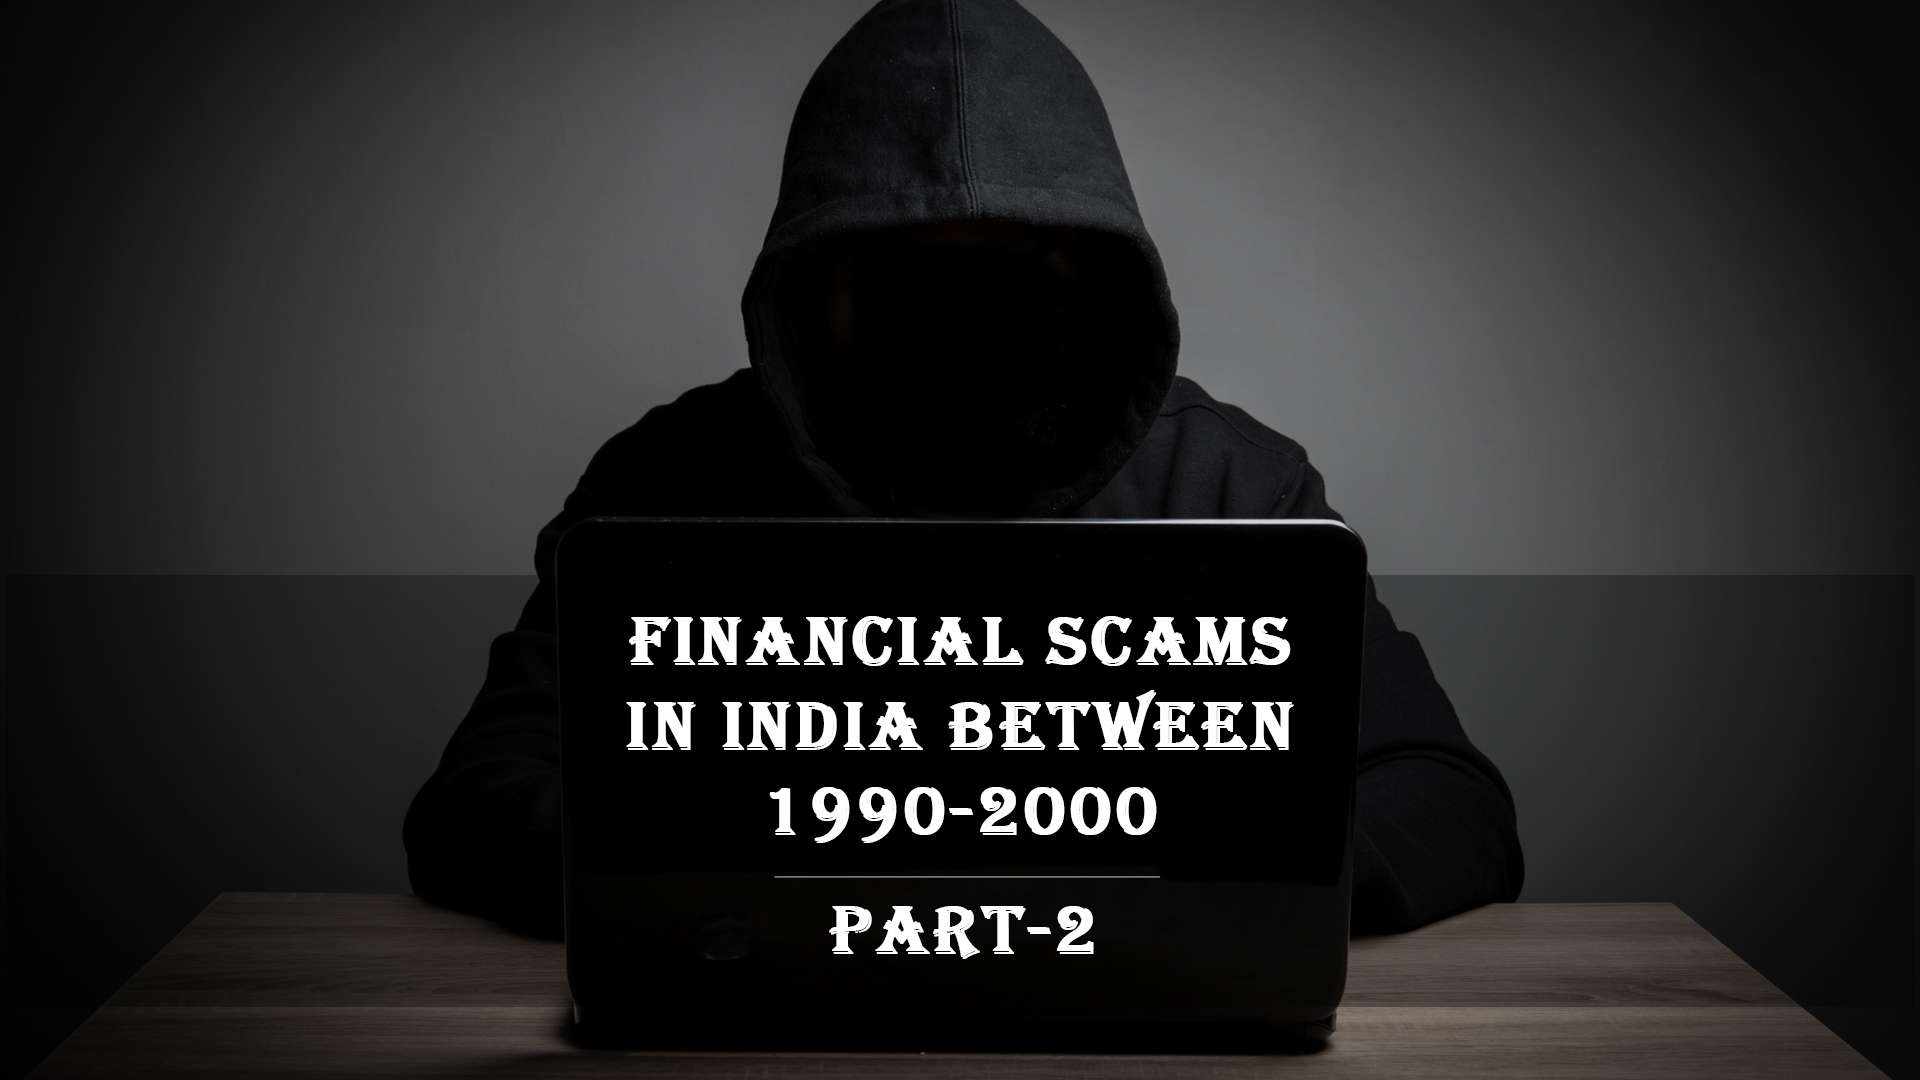 Major Financial Scams in India Between 2000-2010 (Part-2)